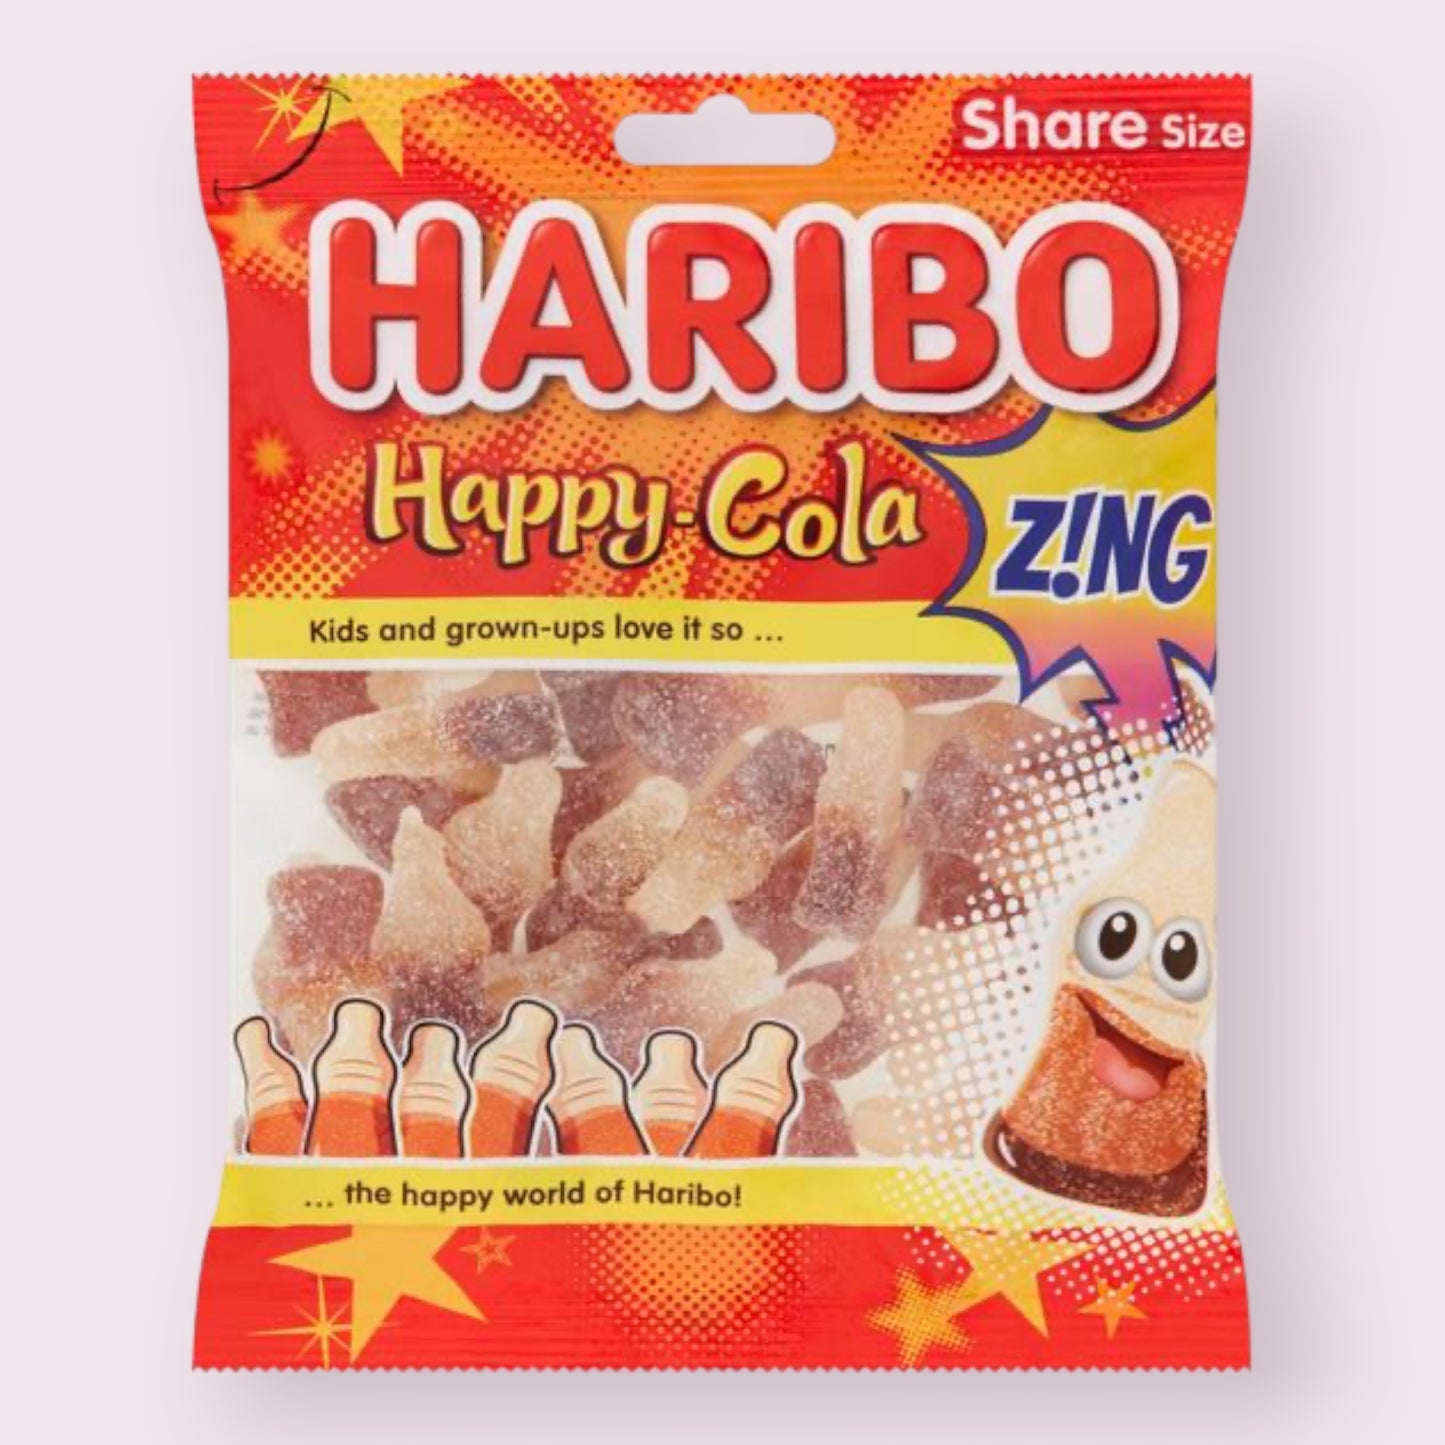 Haribo Happy Cola Z!ng Bag  Pixie Candy Shoppe   